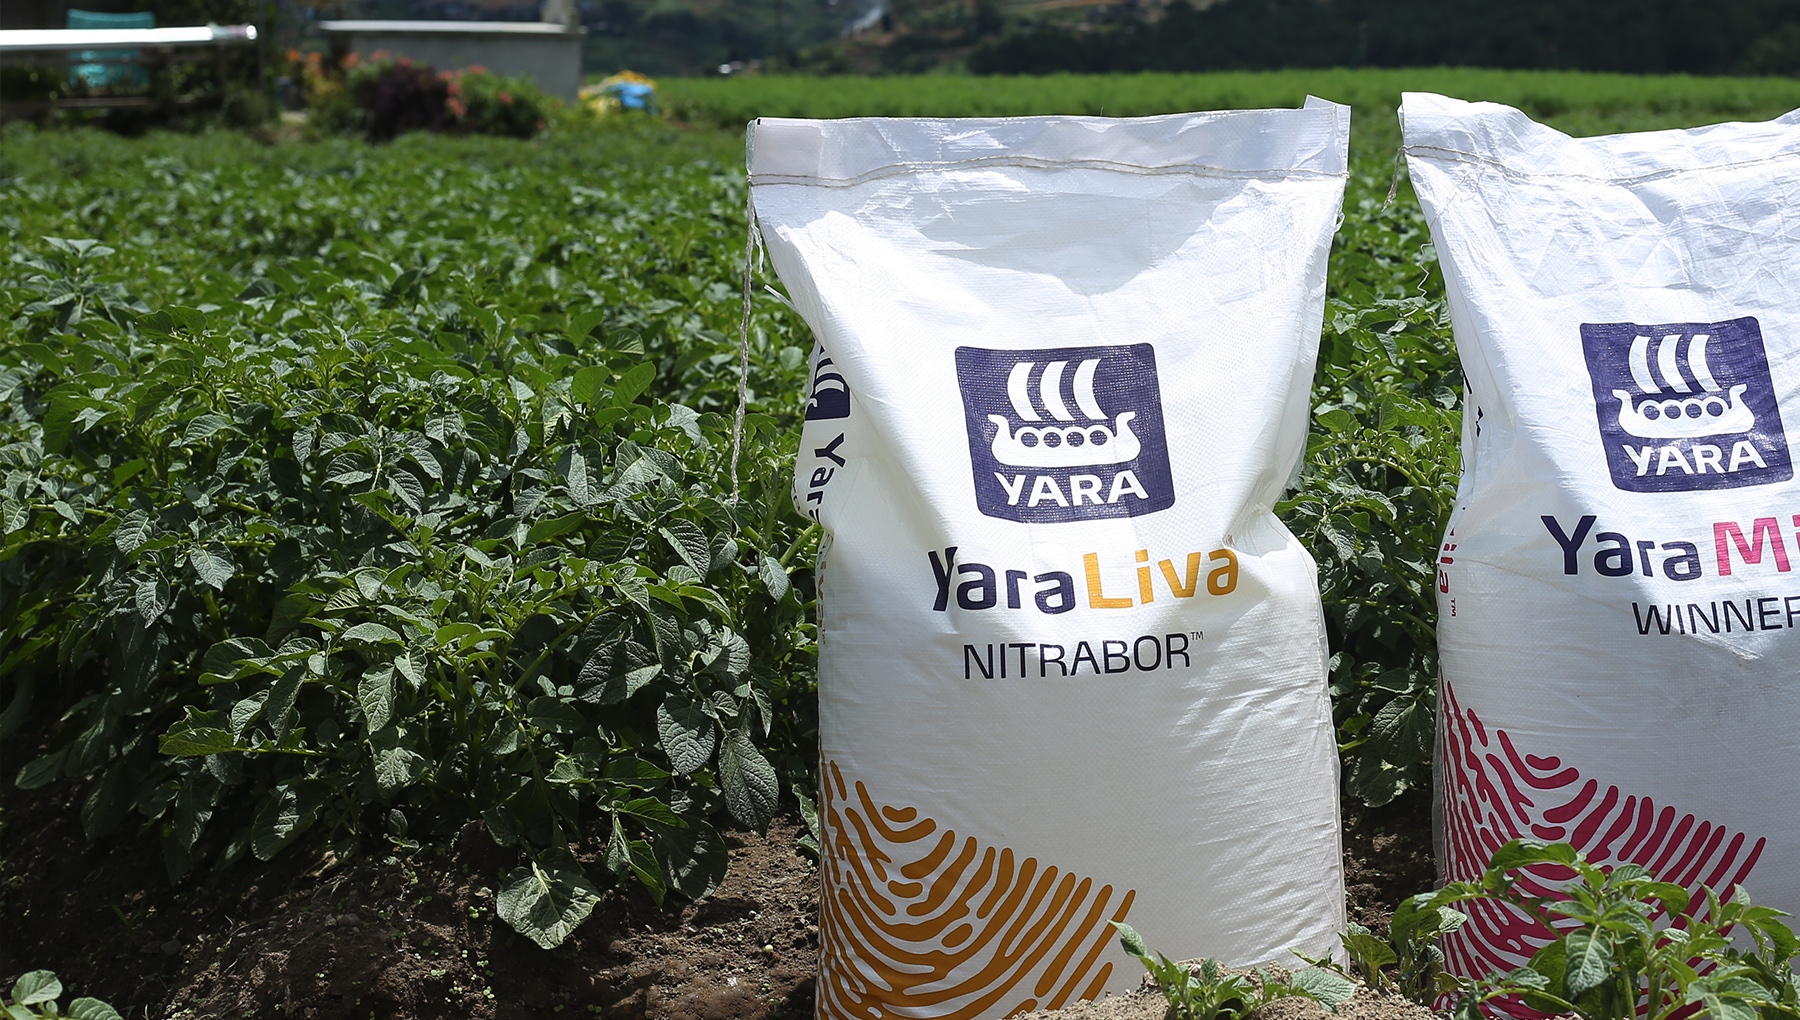 YaraLiva - Calcium nitrate fertilizers